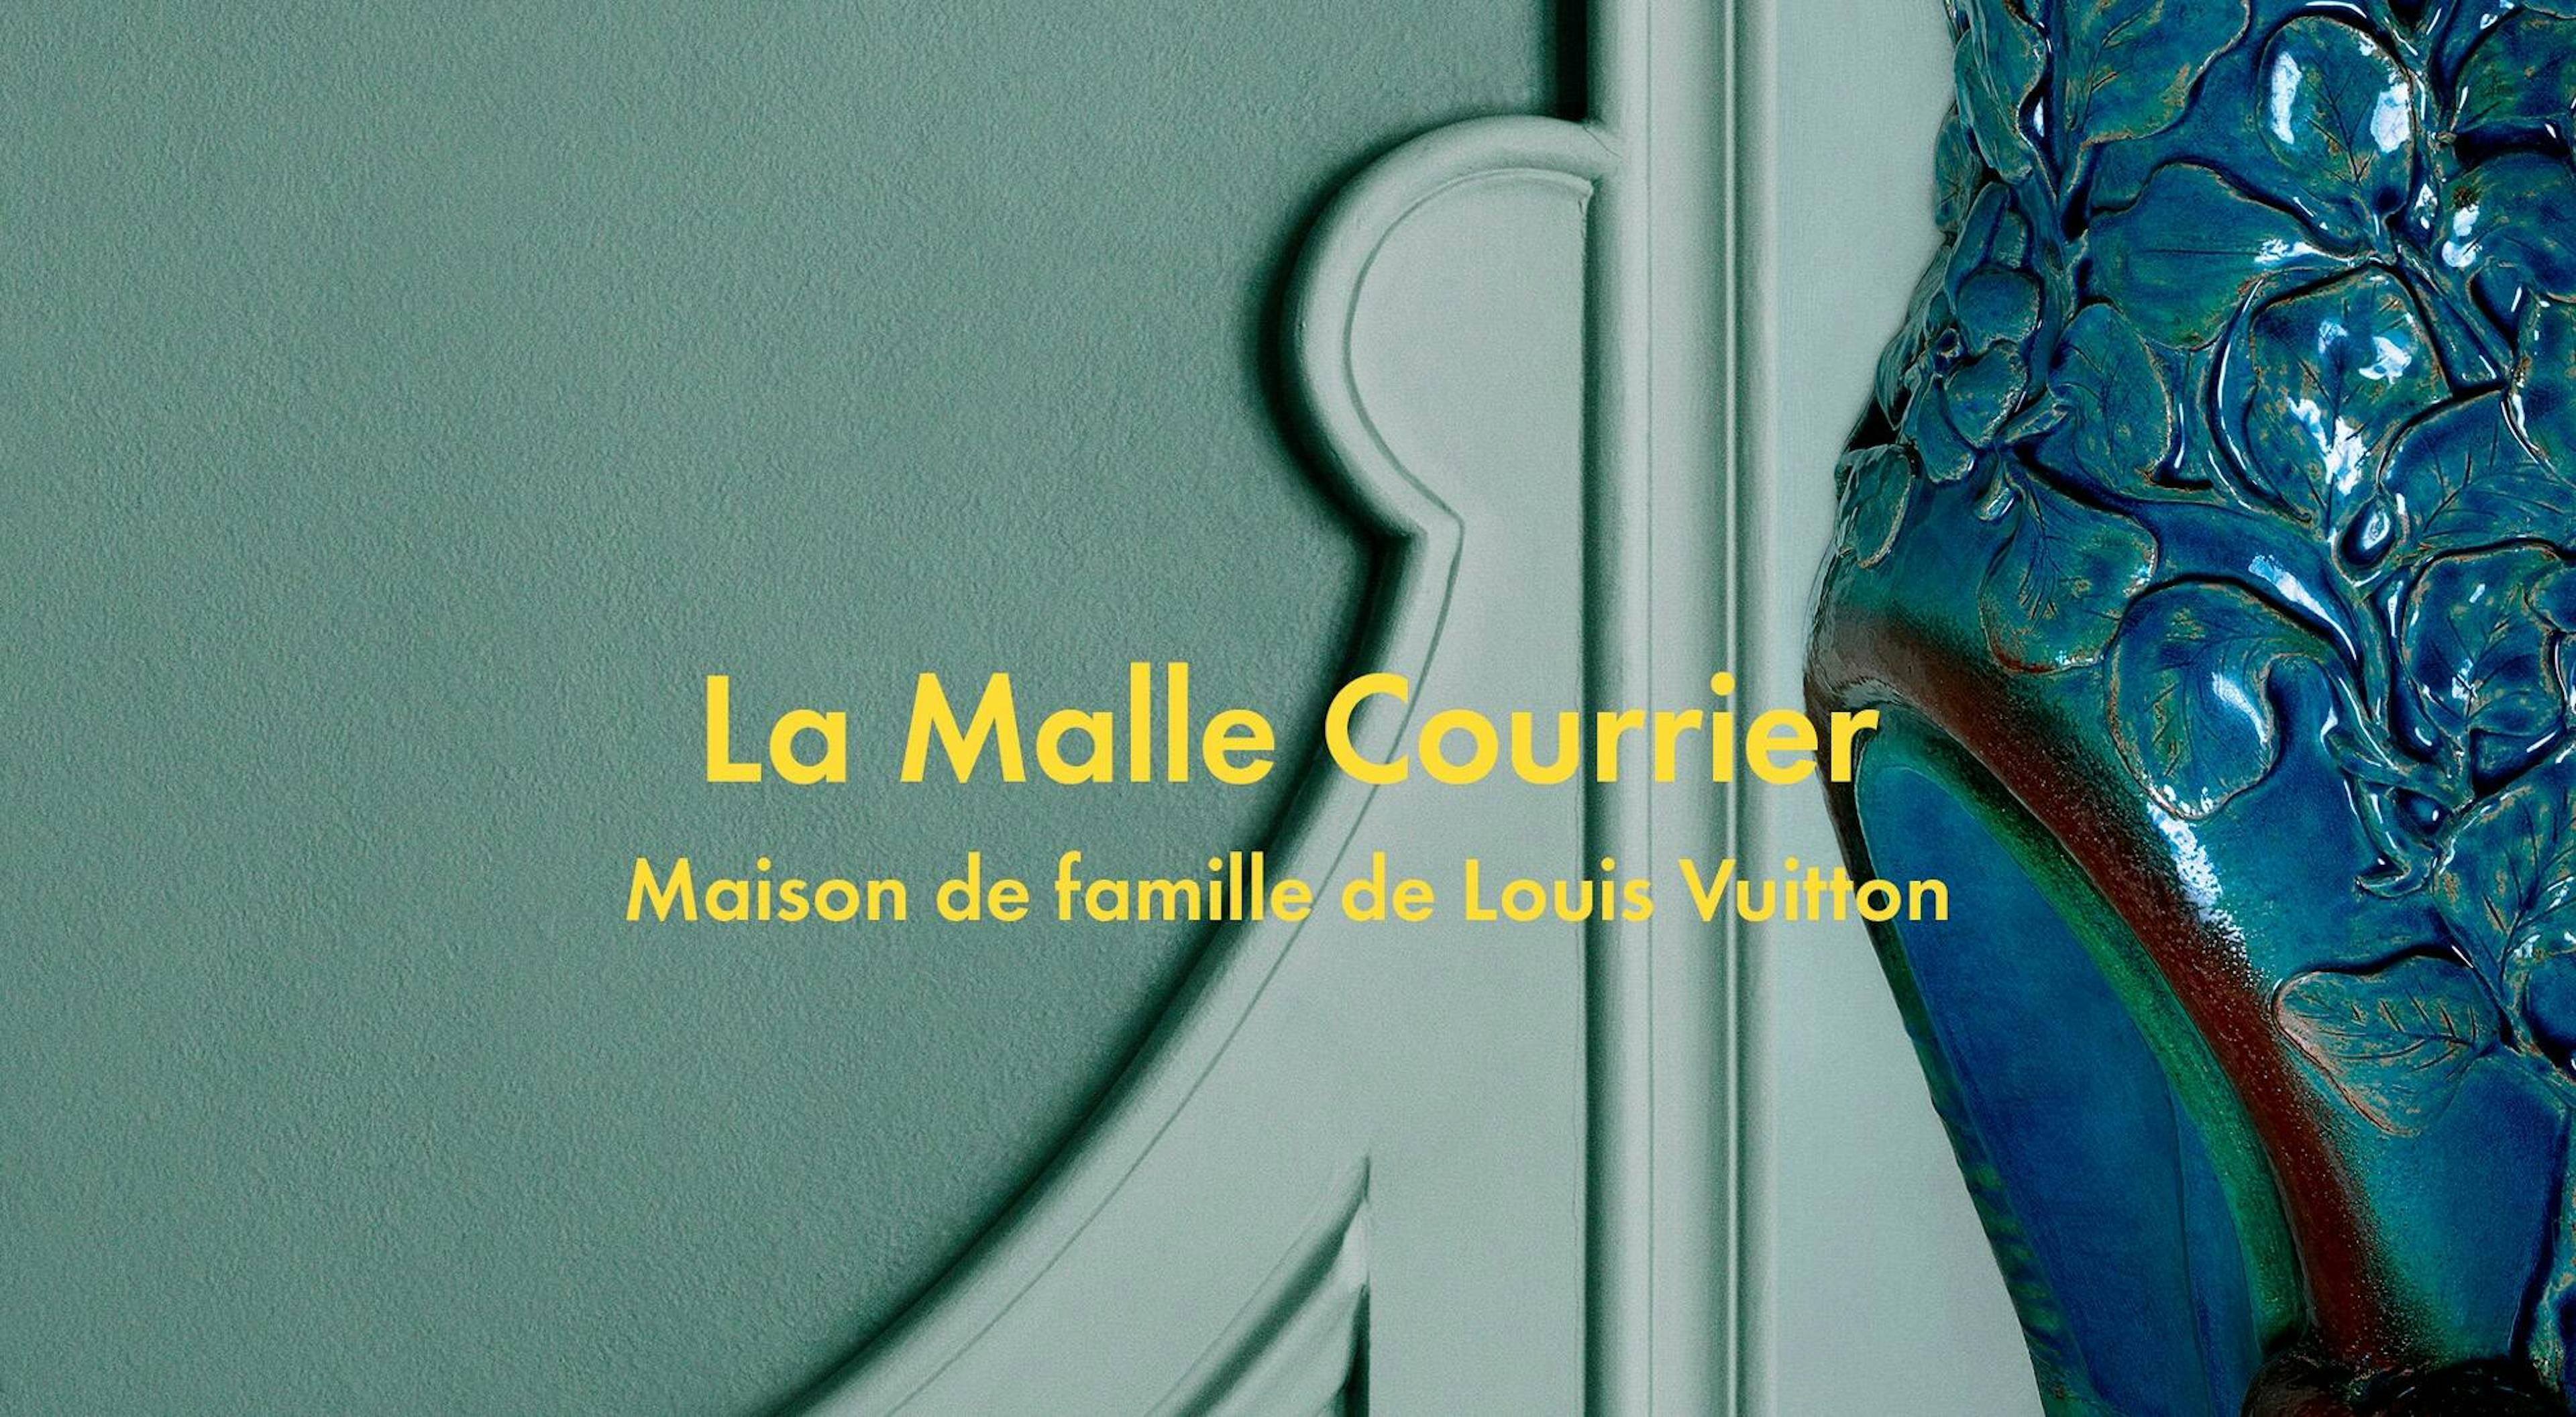 Cover - Louis Vuitton family home presents Malle Courrier exhibition